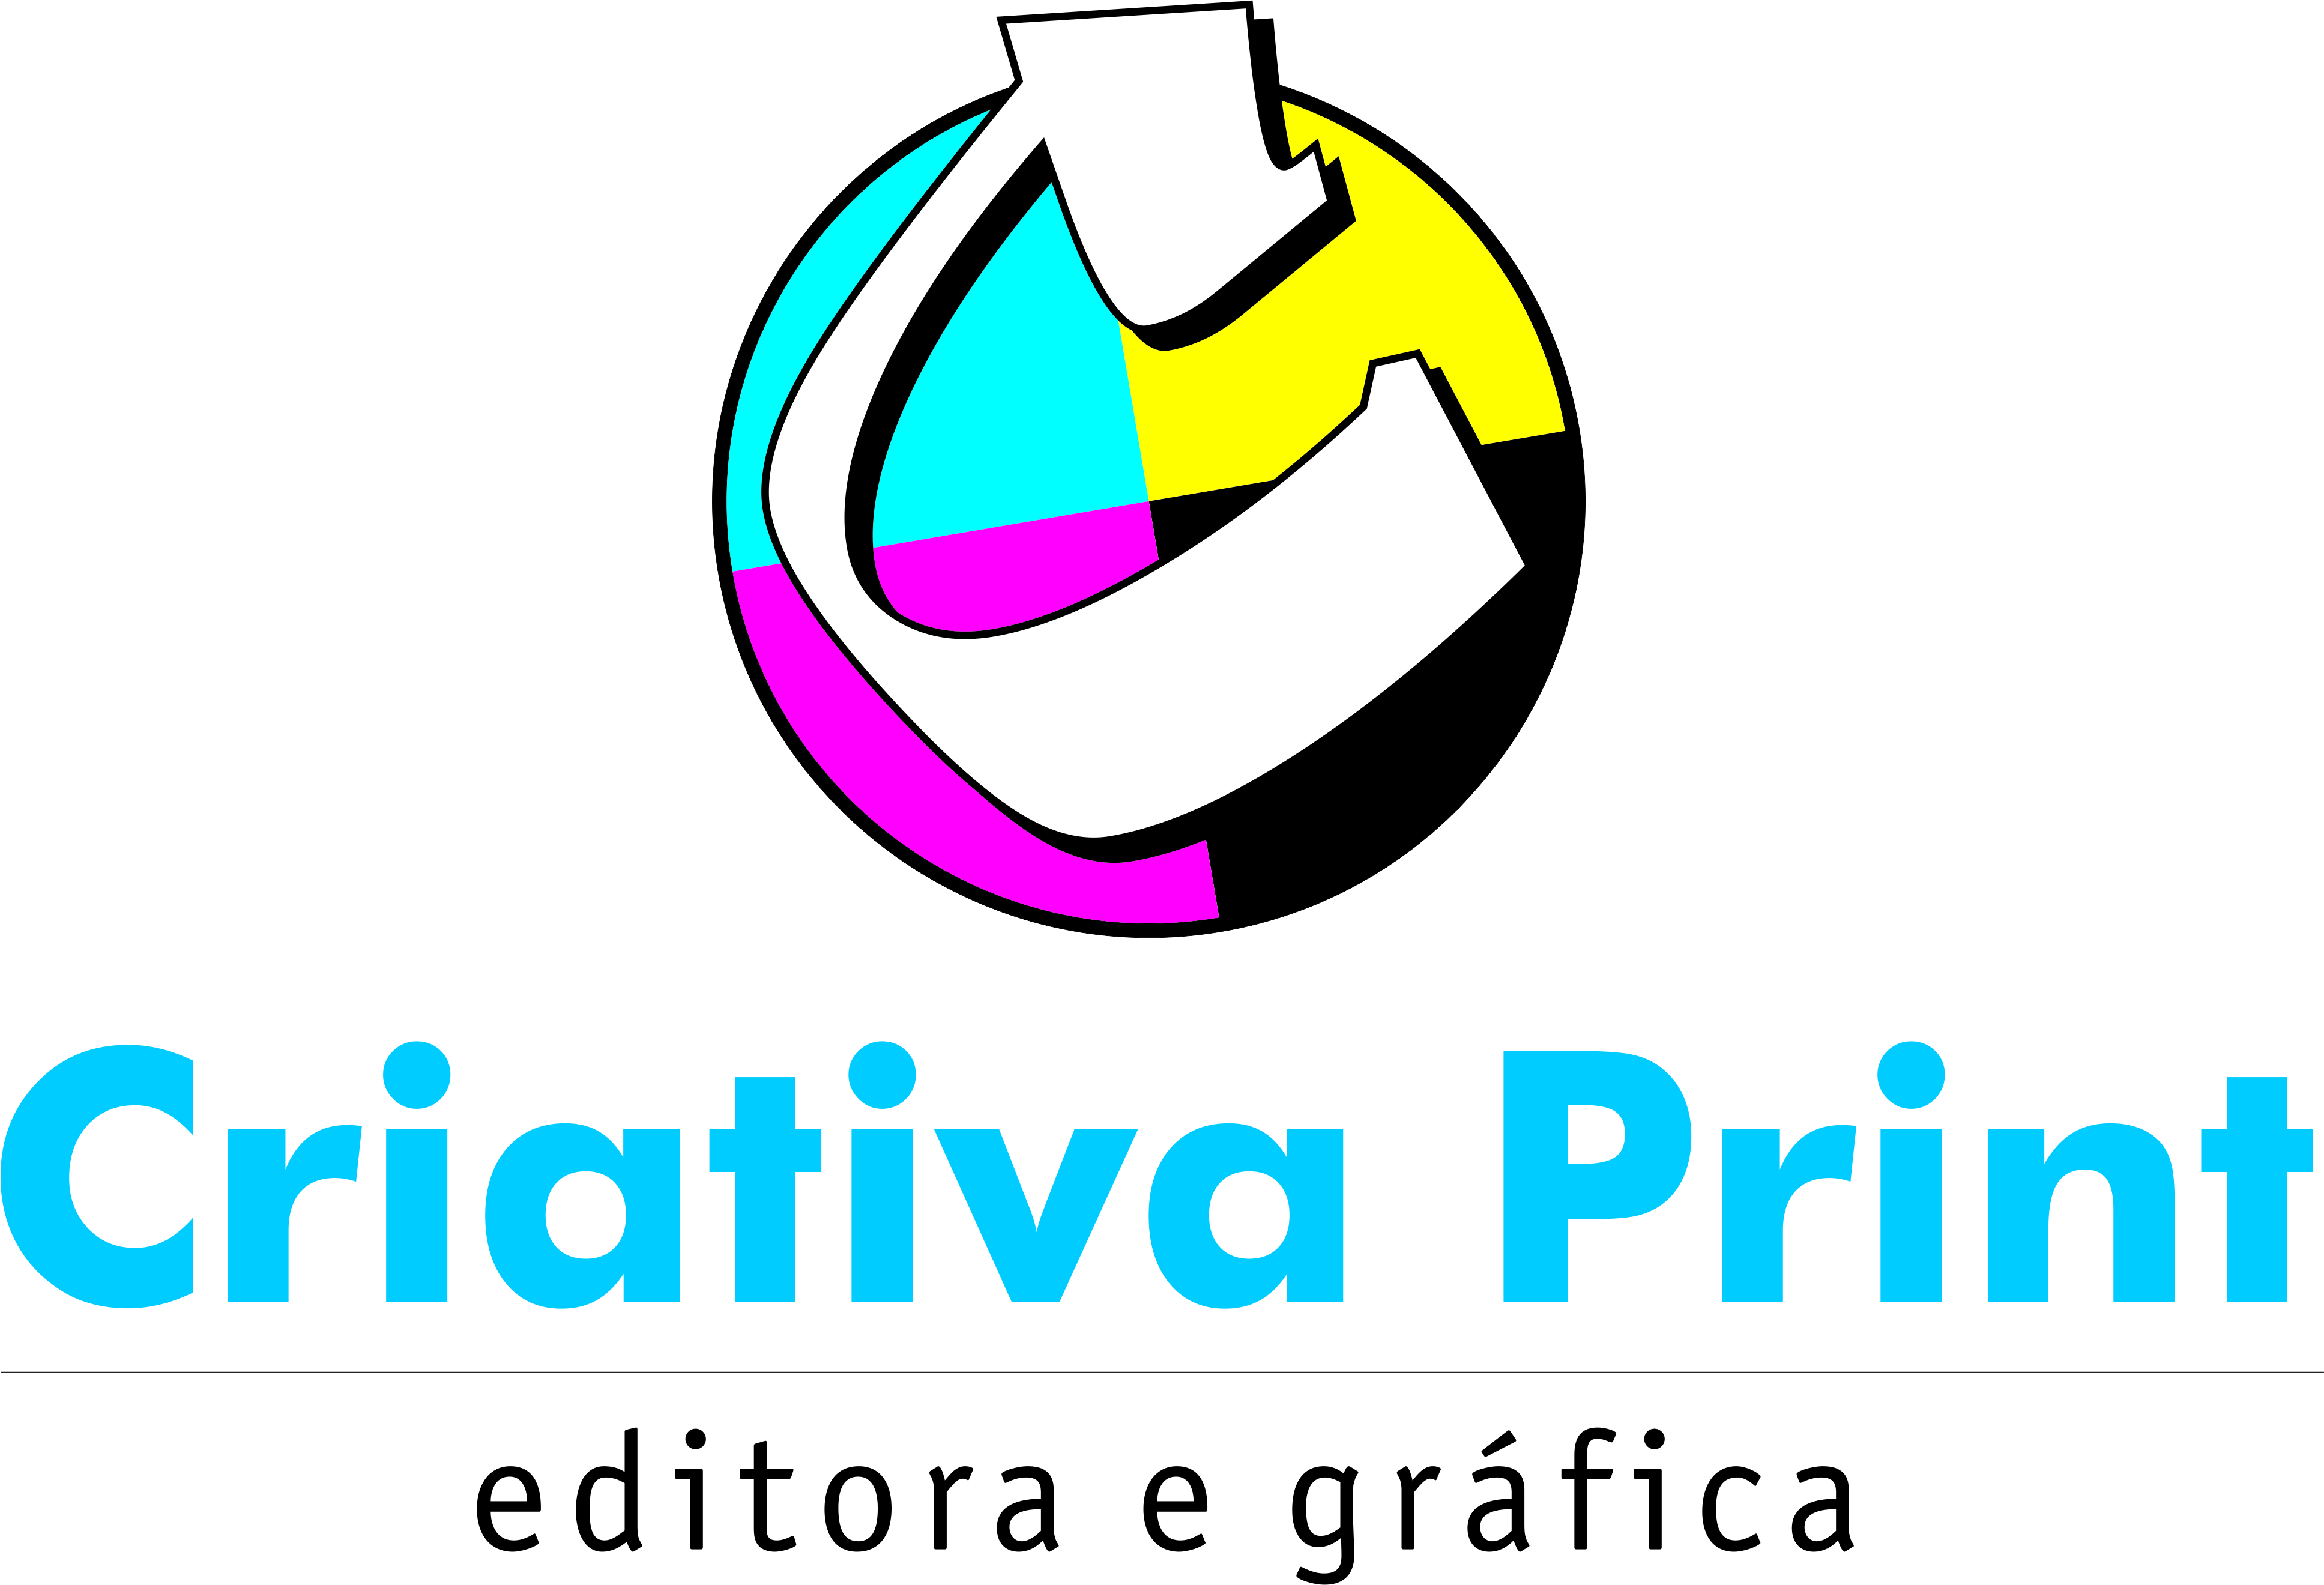 CRIATIVA PRINT logo